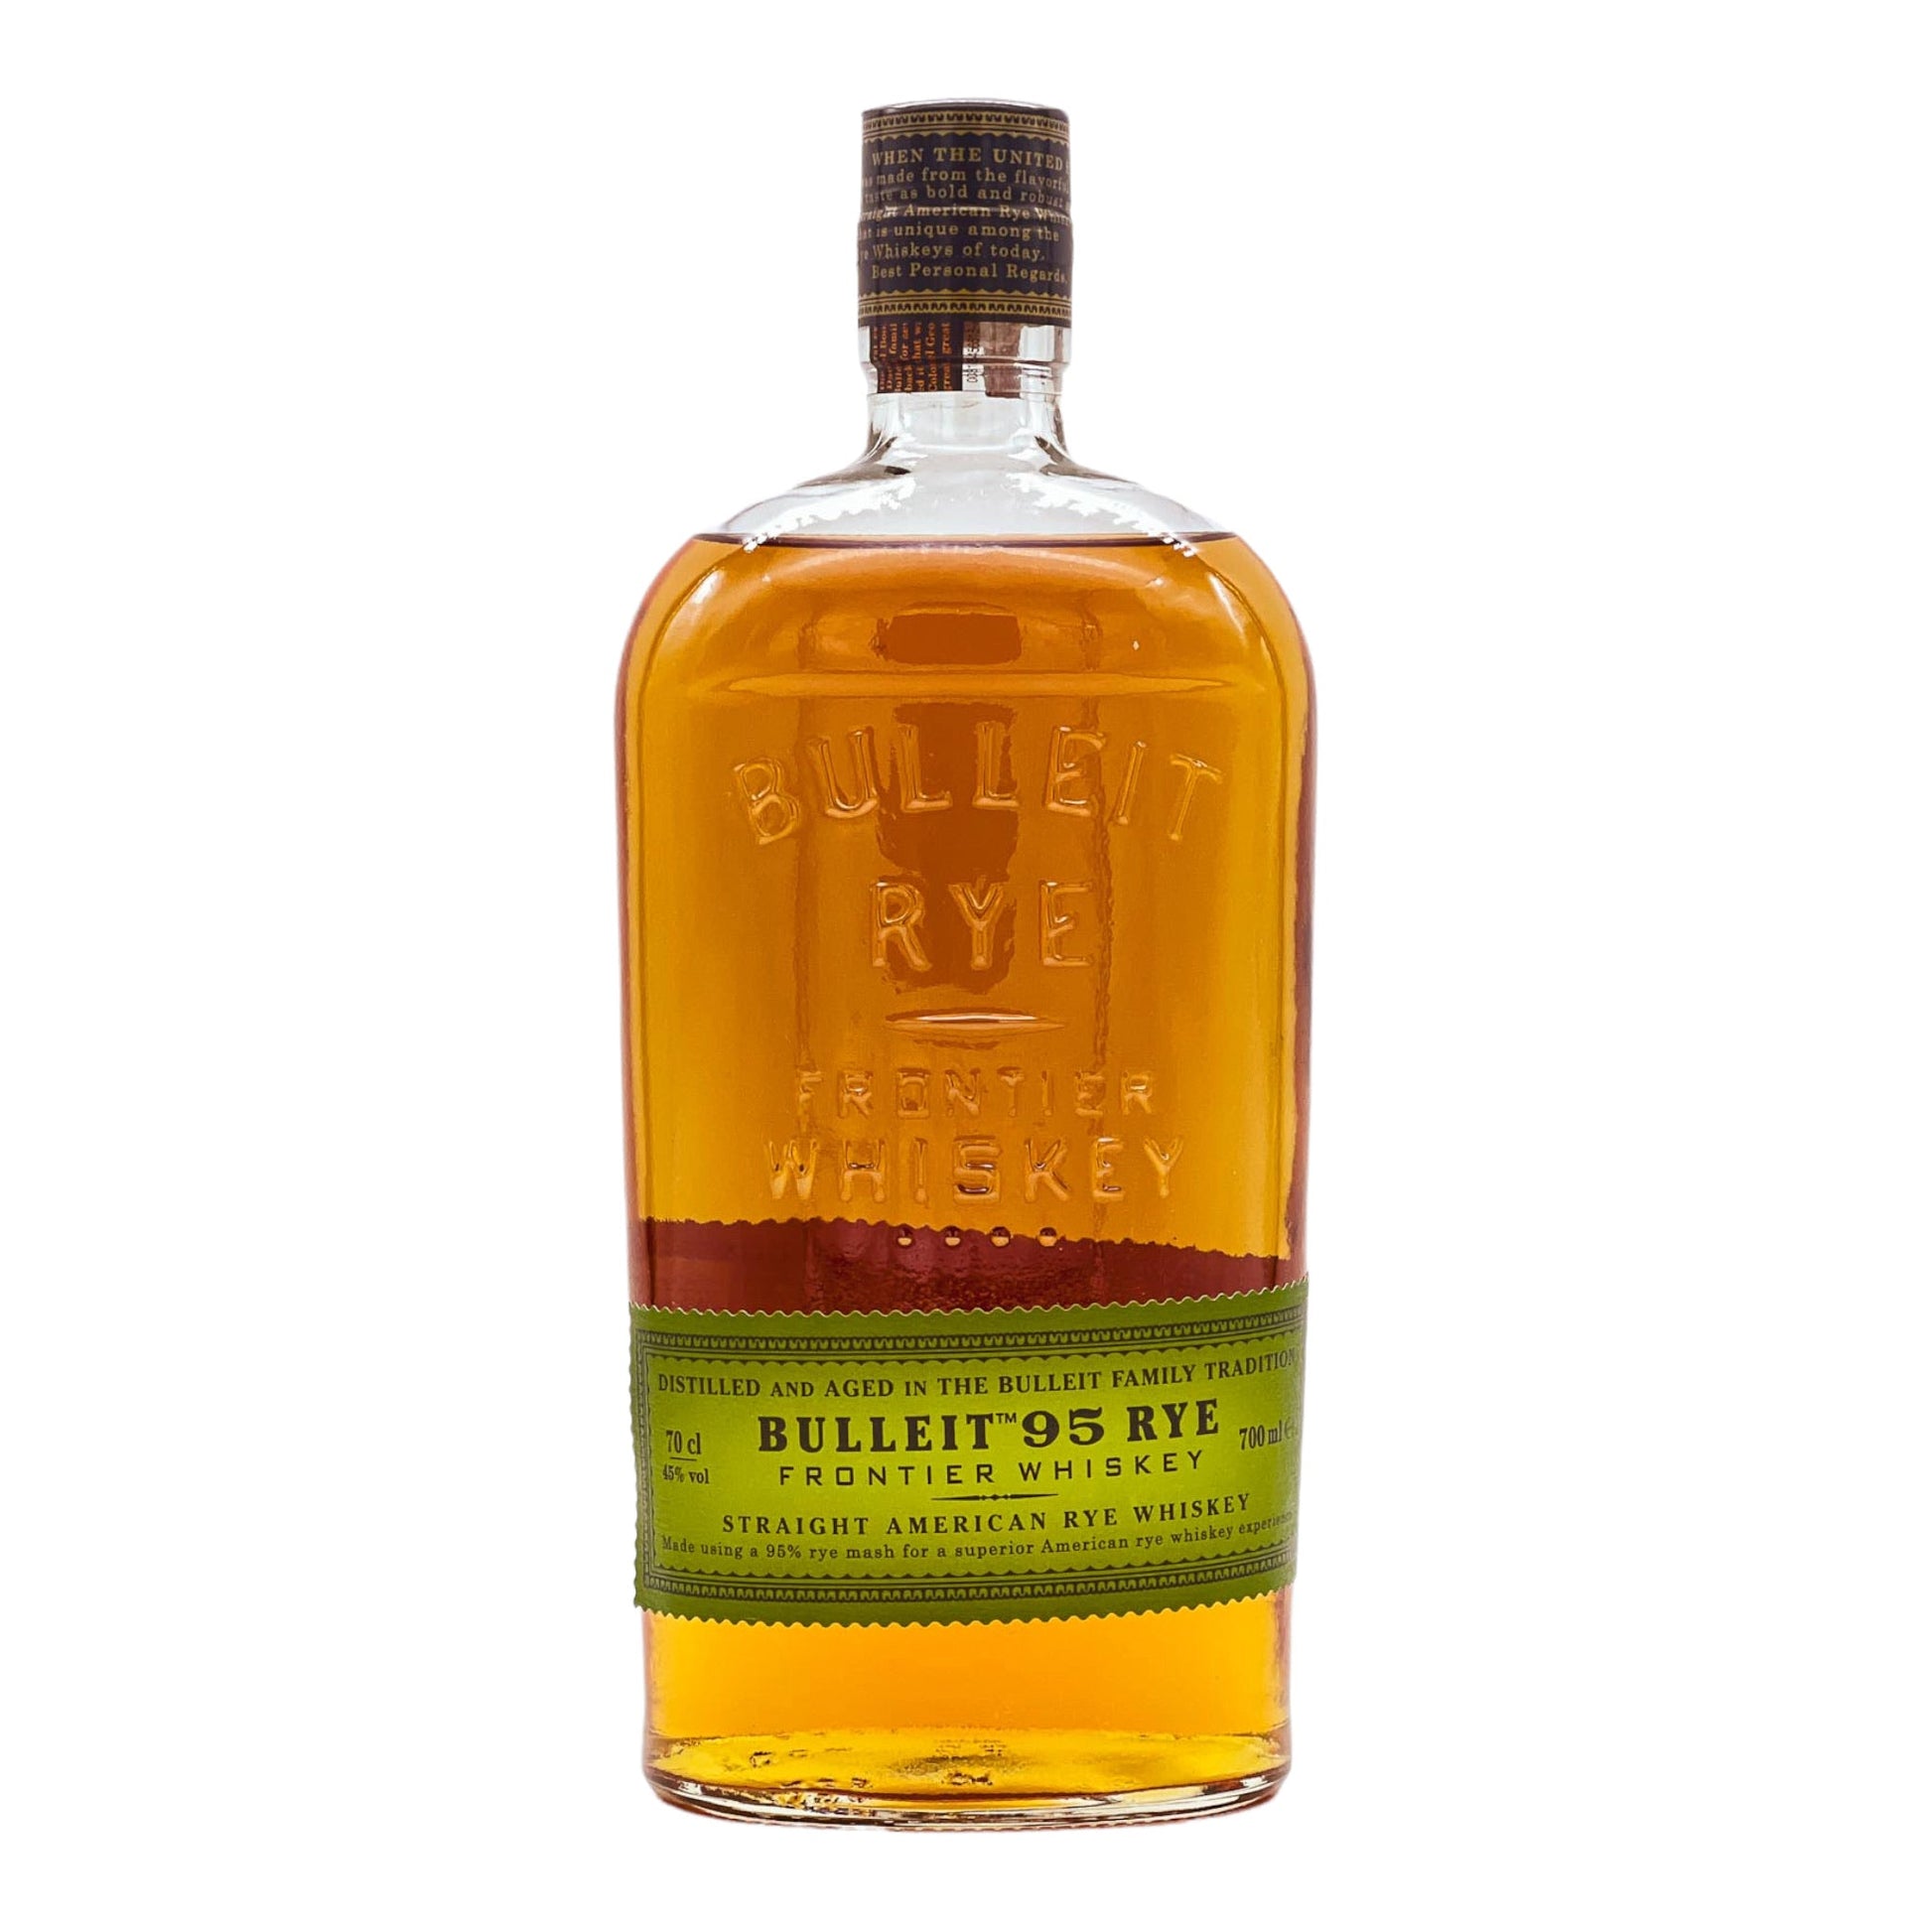 Bulleit | 95 Rye Frontier Whiskey | 0,7l | 45%GET A BOTTLE